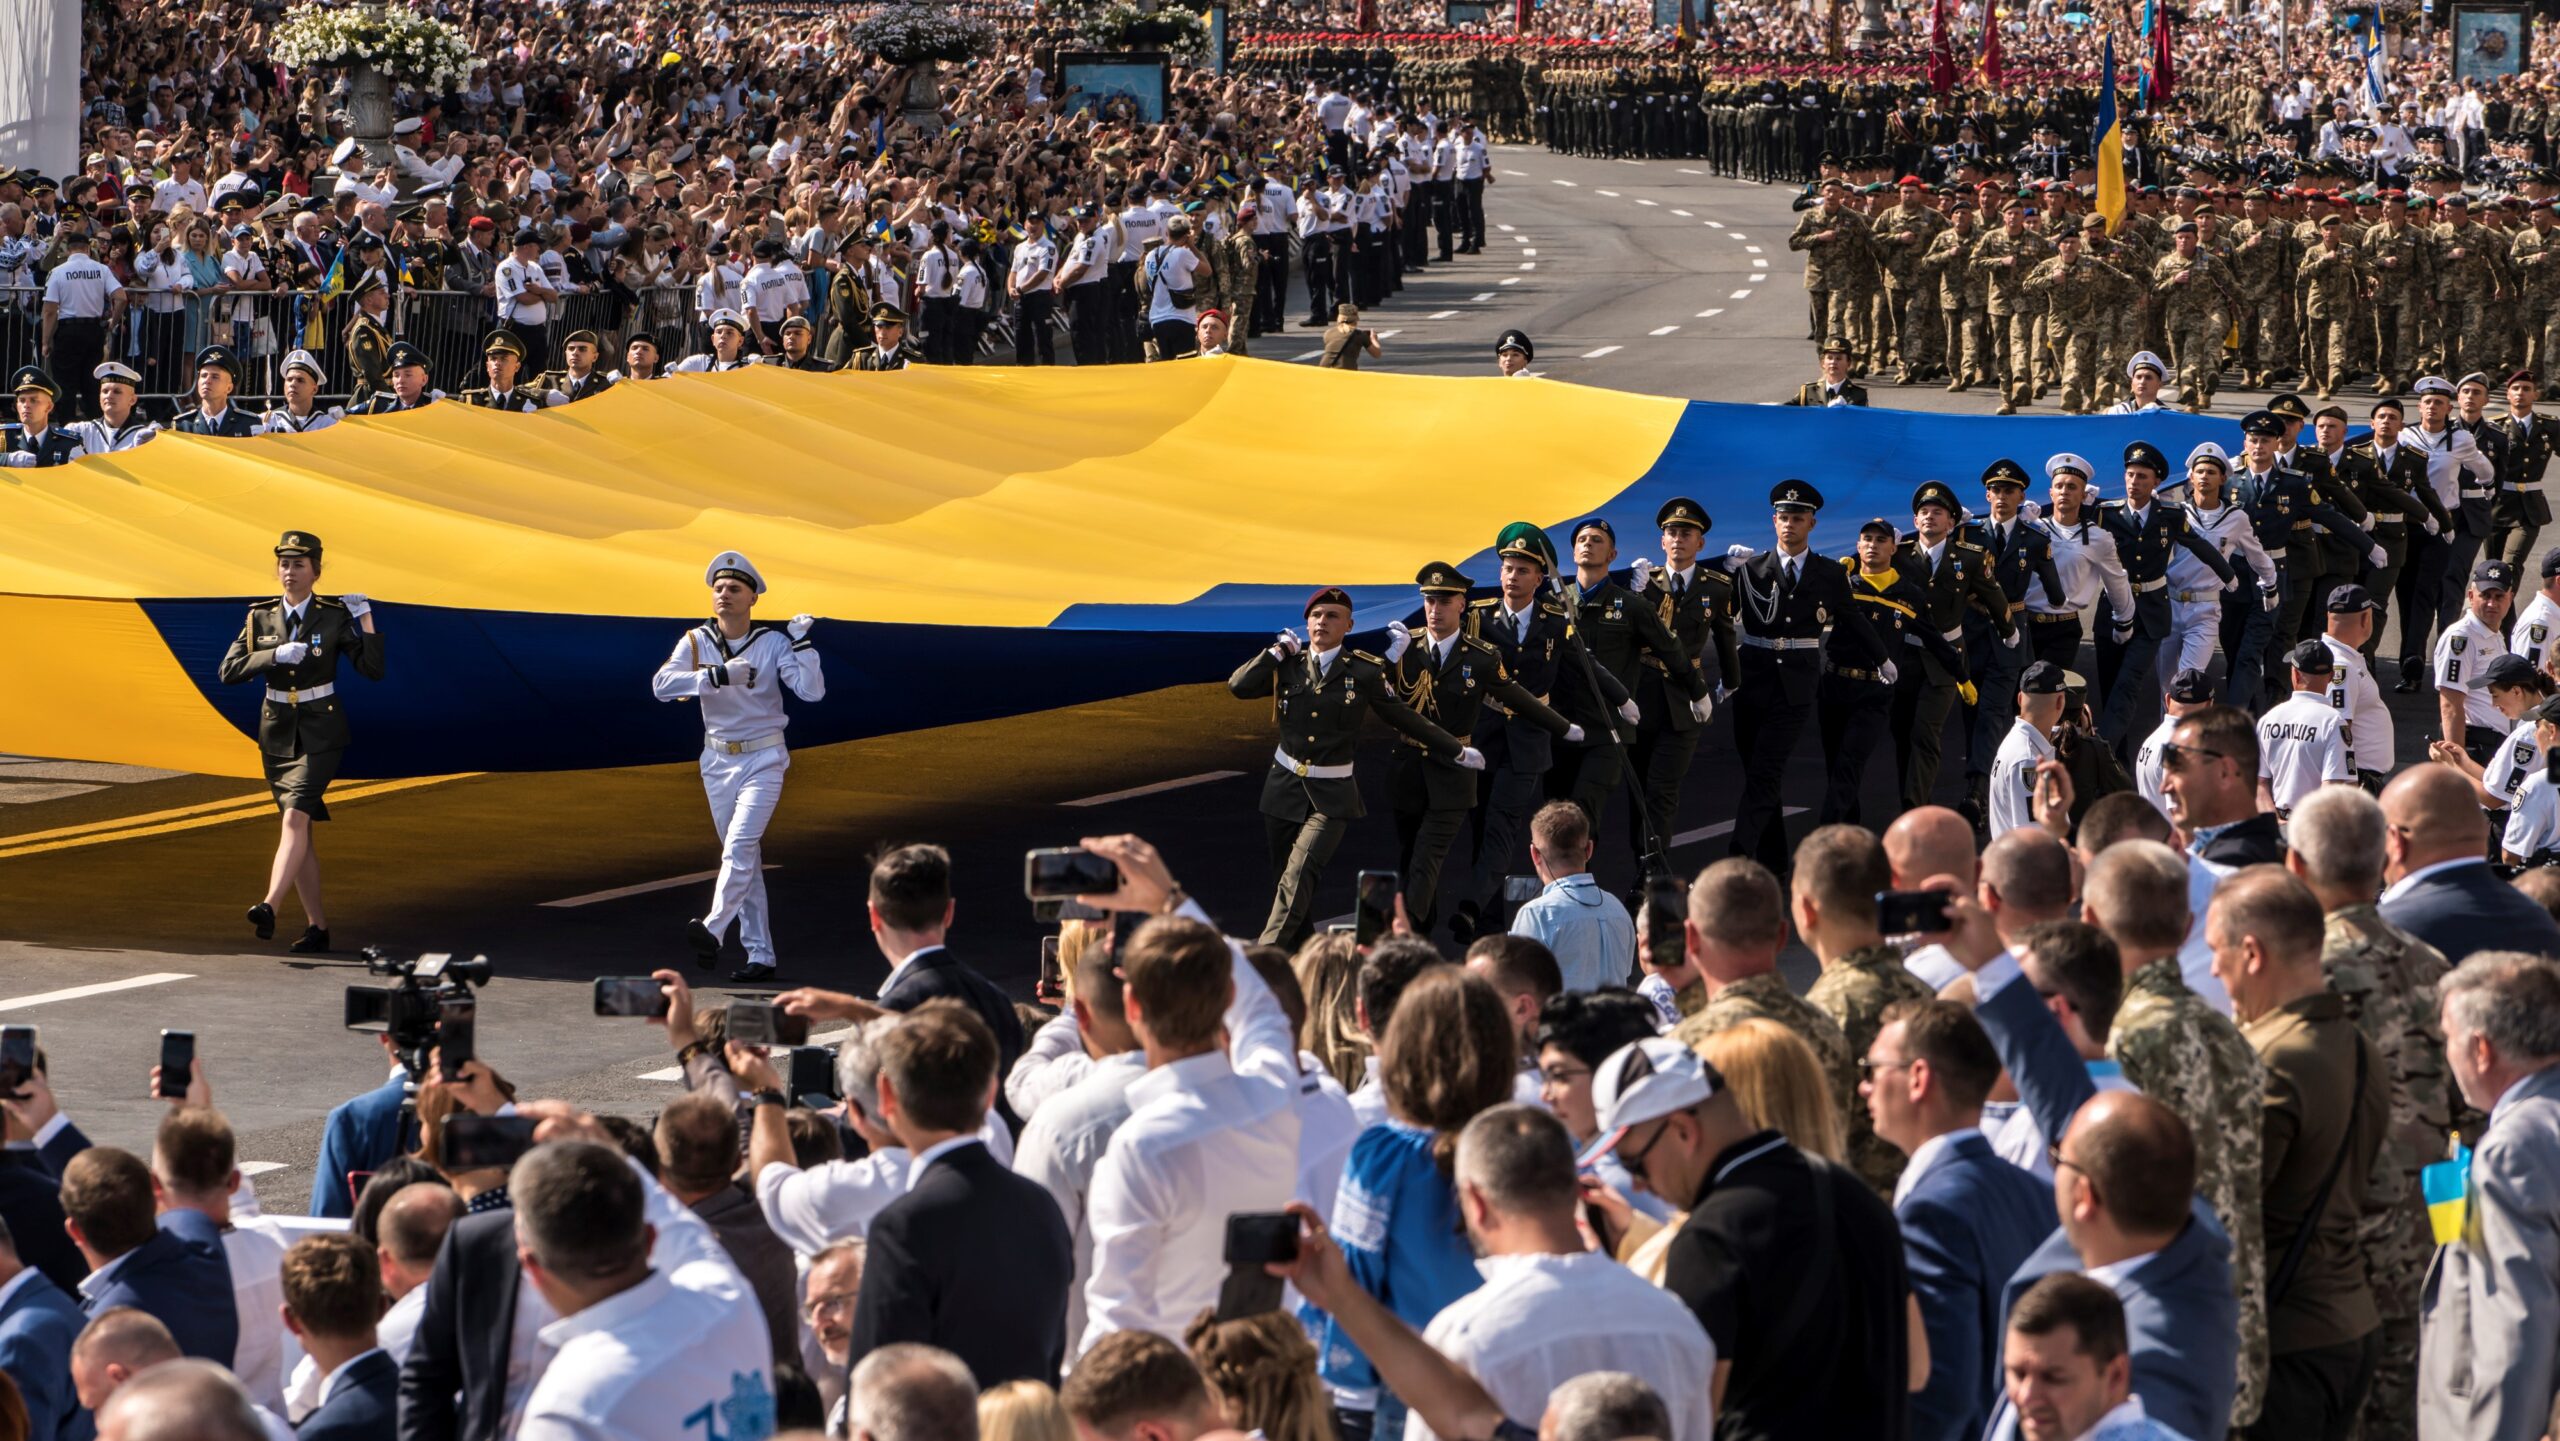 Ukraine military parade